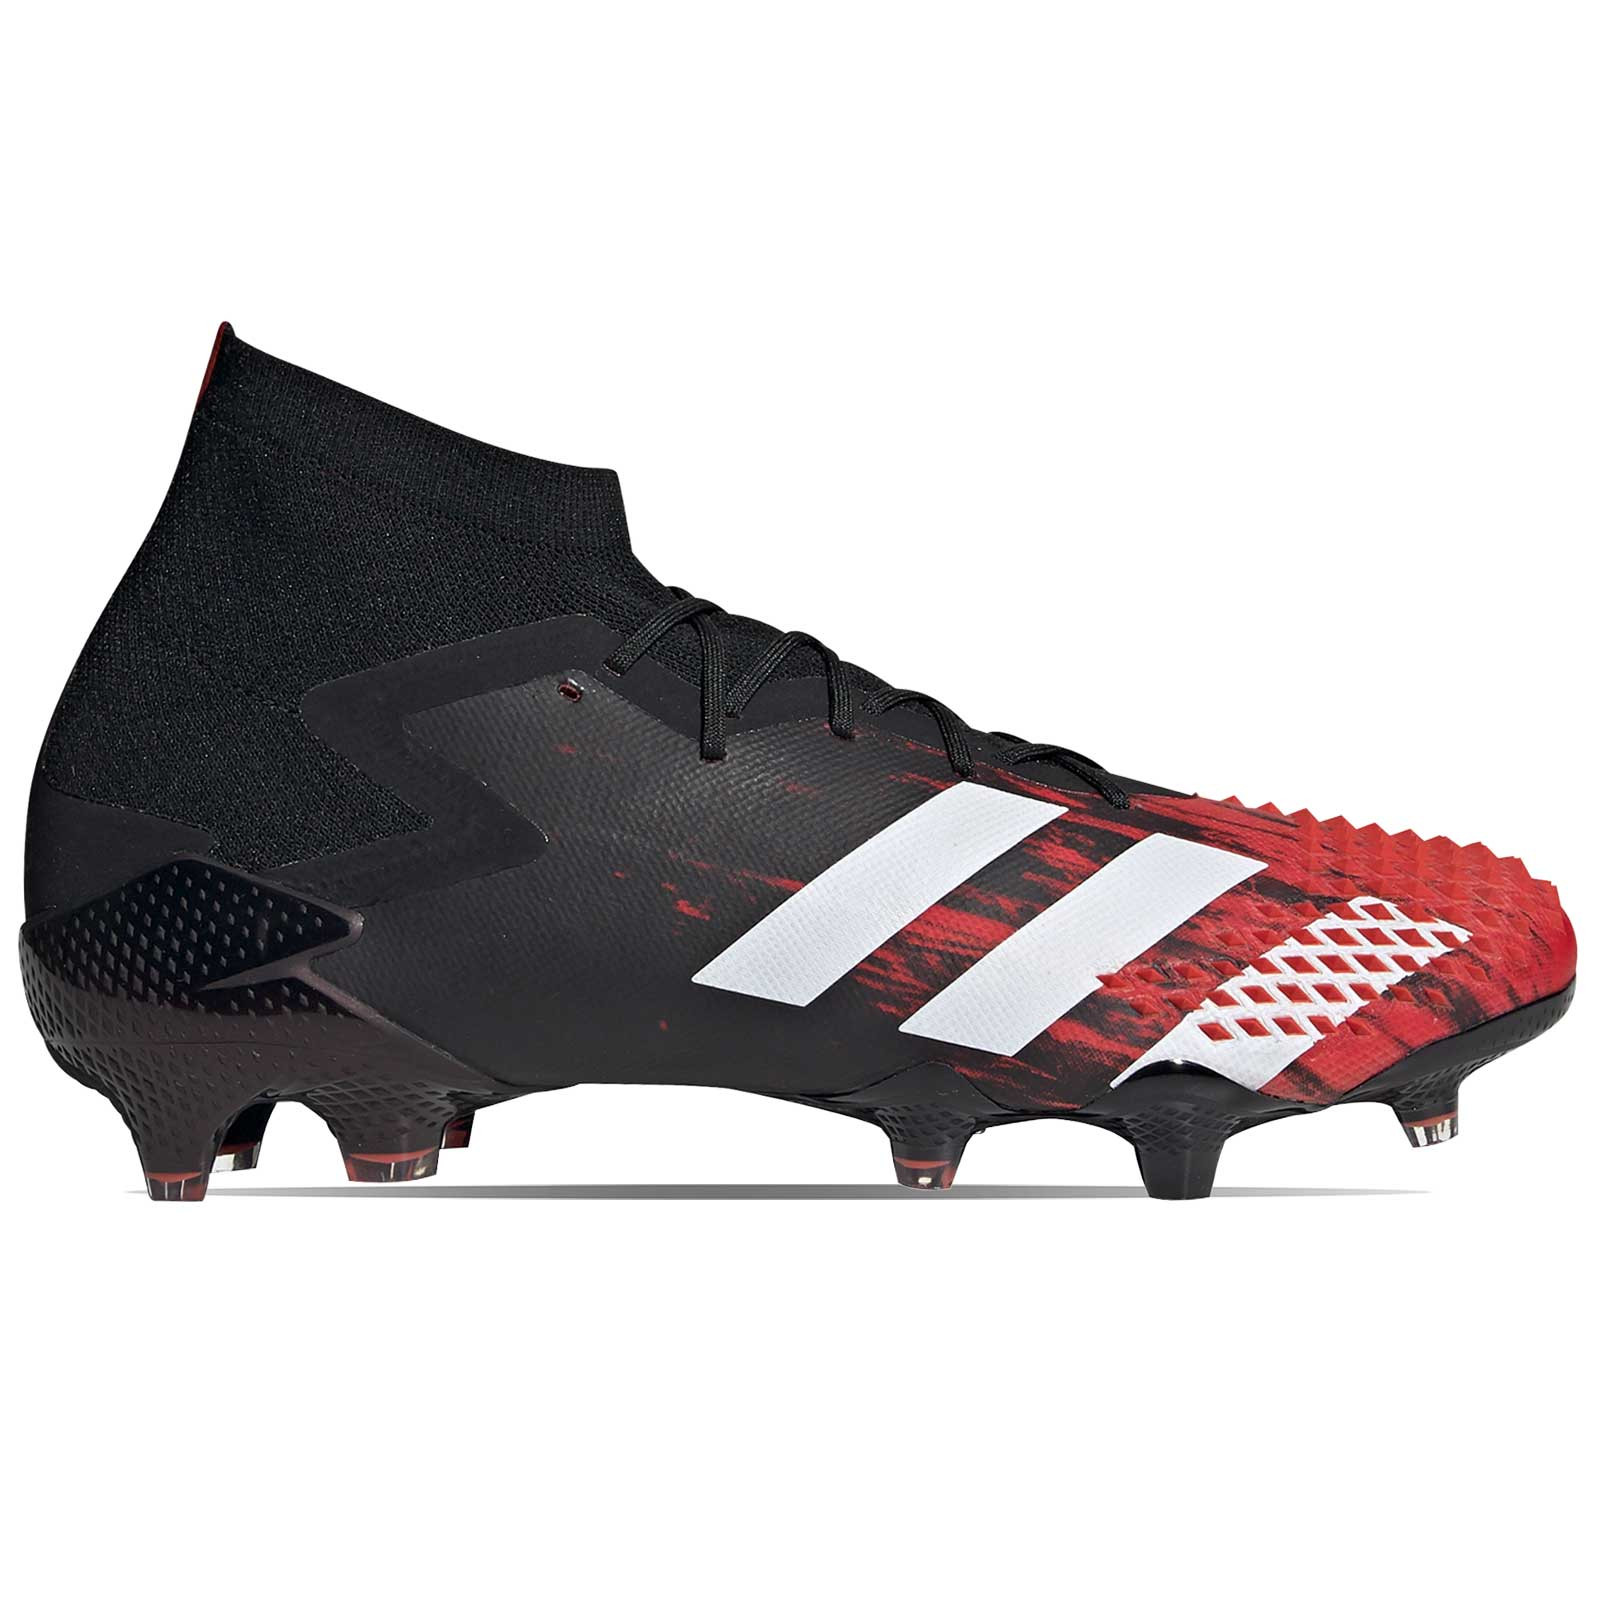 Botas adidas Predator rojas negras | futbolmania